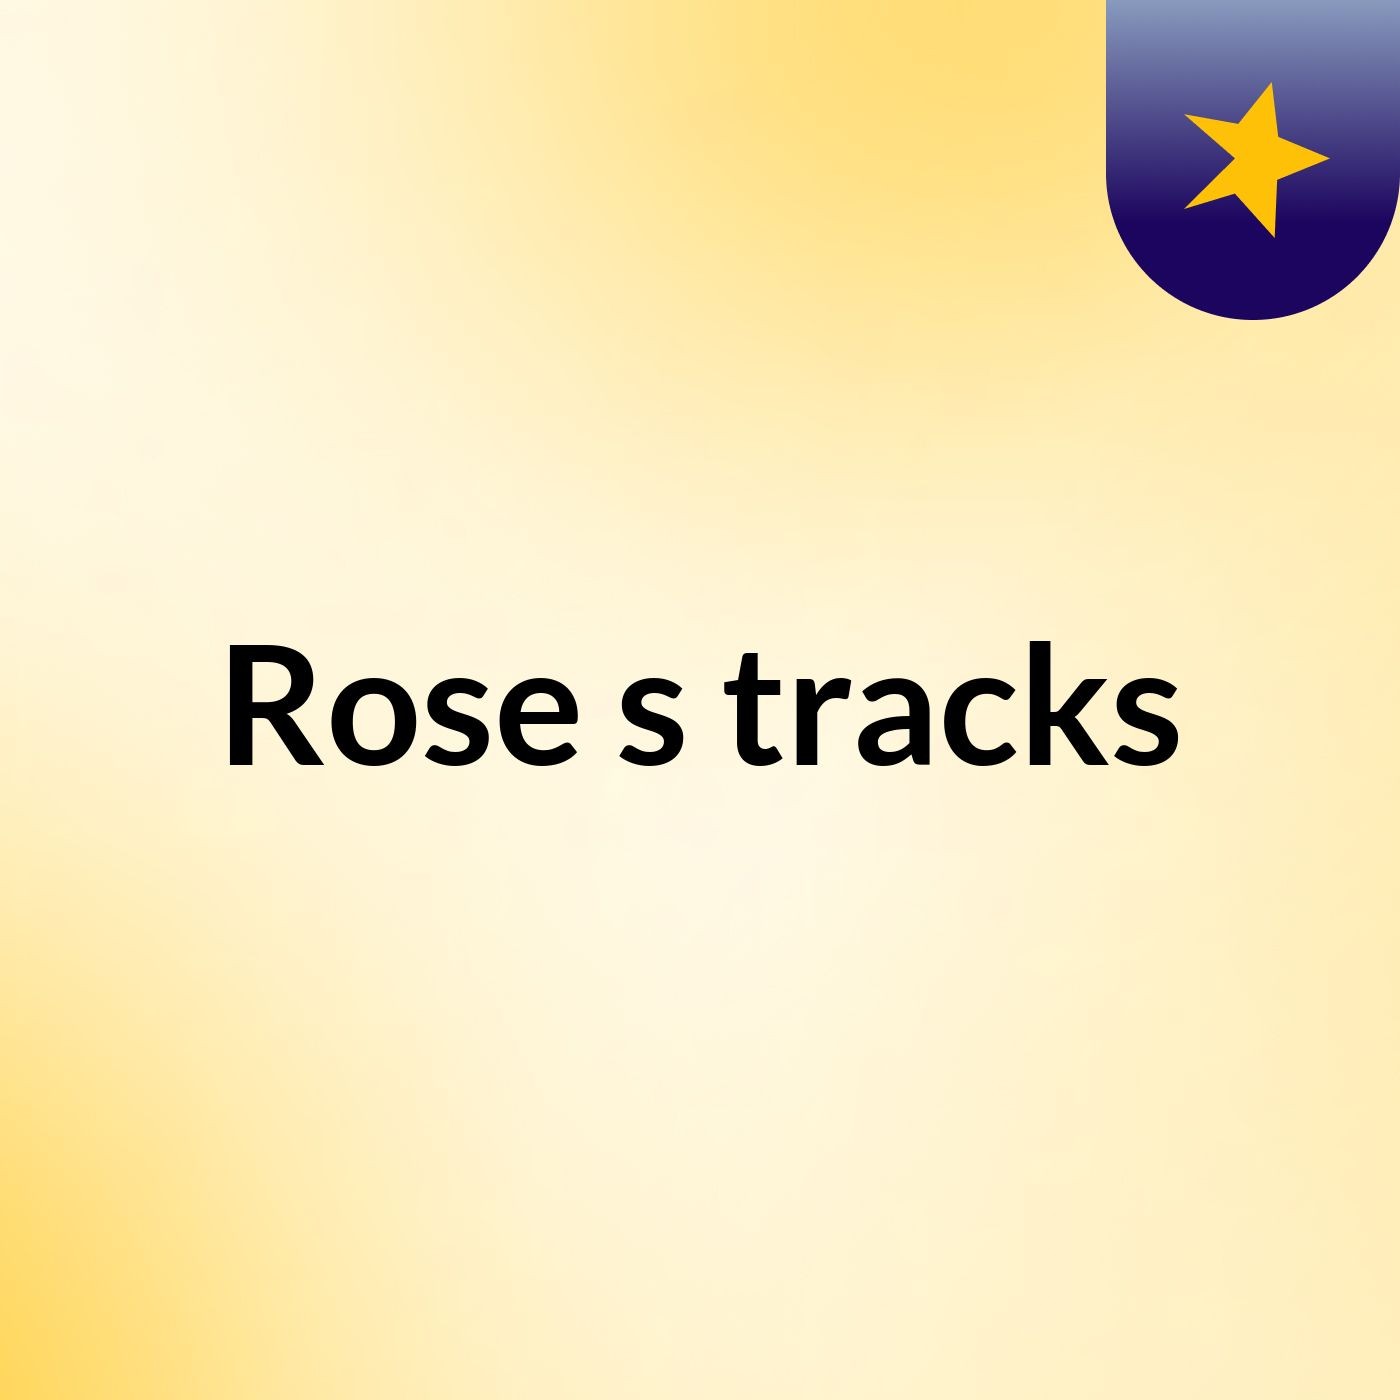 Rose's tracks